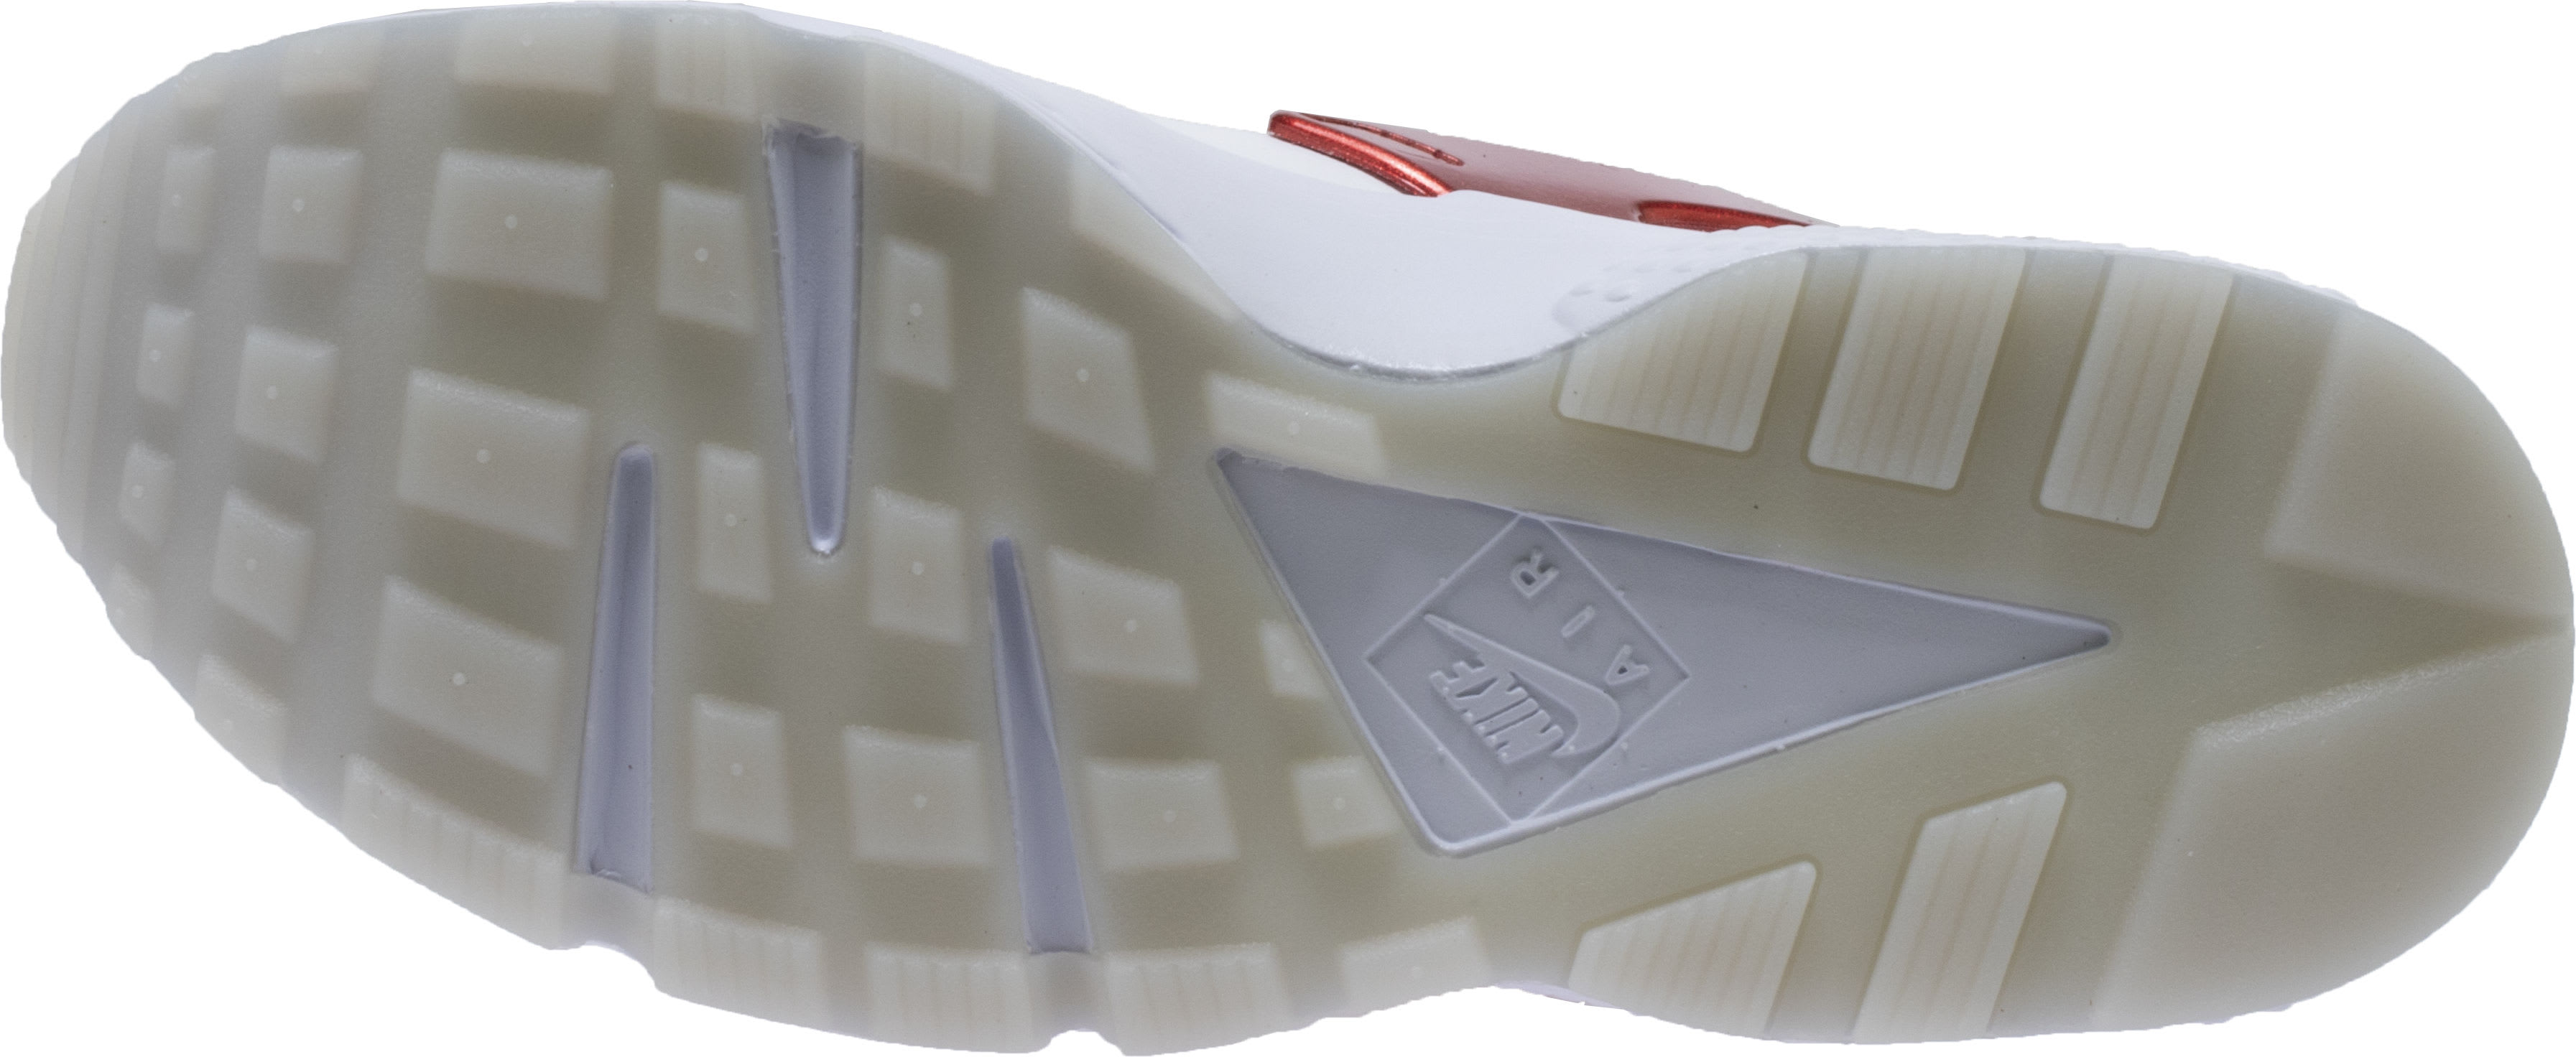 Shoe Palace x Nike Air Huarache White/Red/Platinum &#x27;Joonbug&#x27; AJ5578-101 (Bottom)